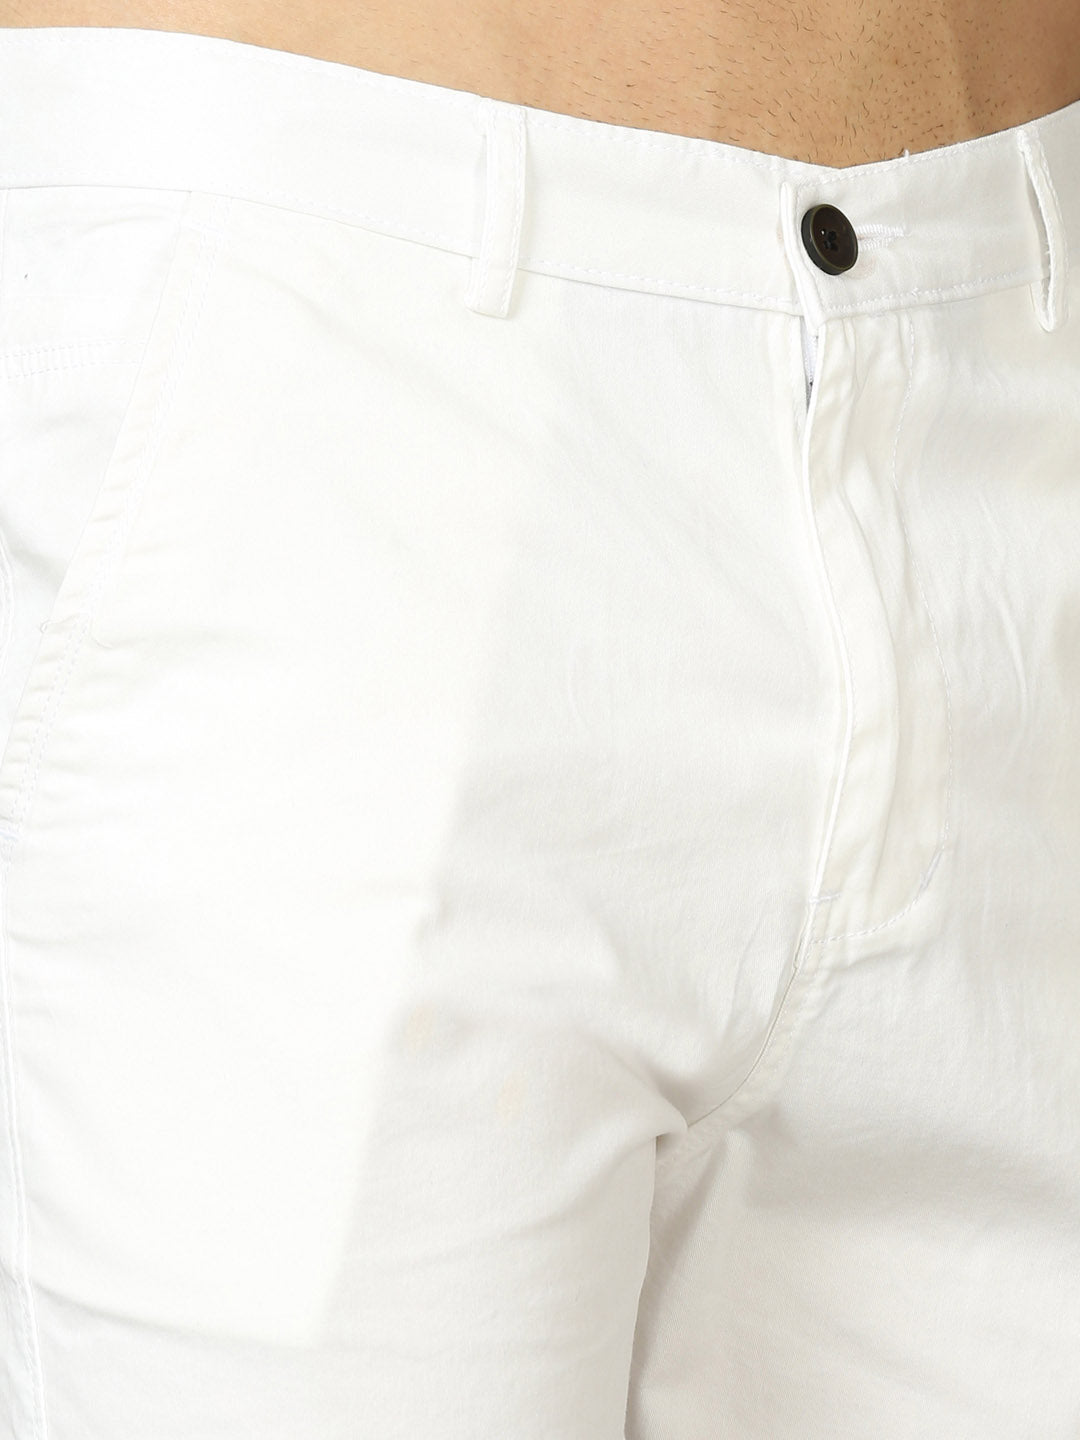 Classic White Chino Shorts  Shorts for Men  Chino Shorts  Buy Online  Shorts for Men  Comfort Shorts  Summer Shorts